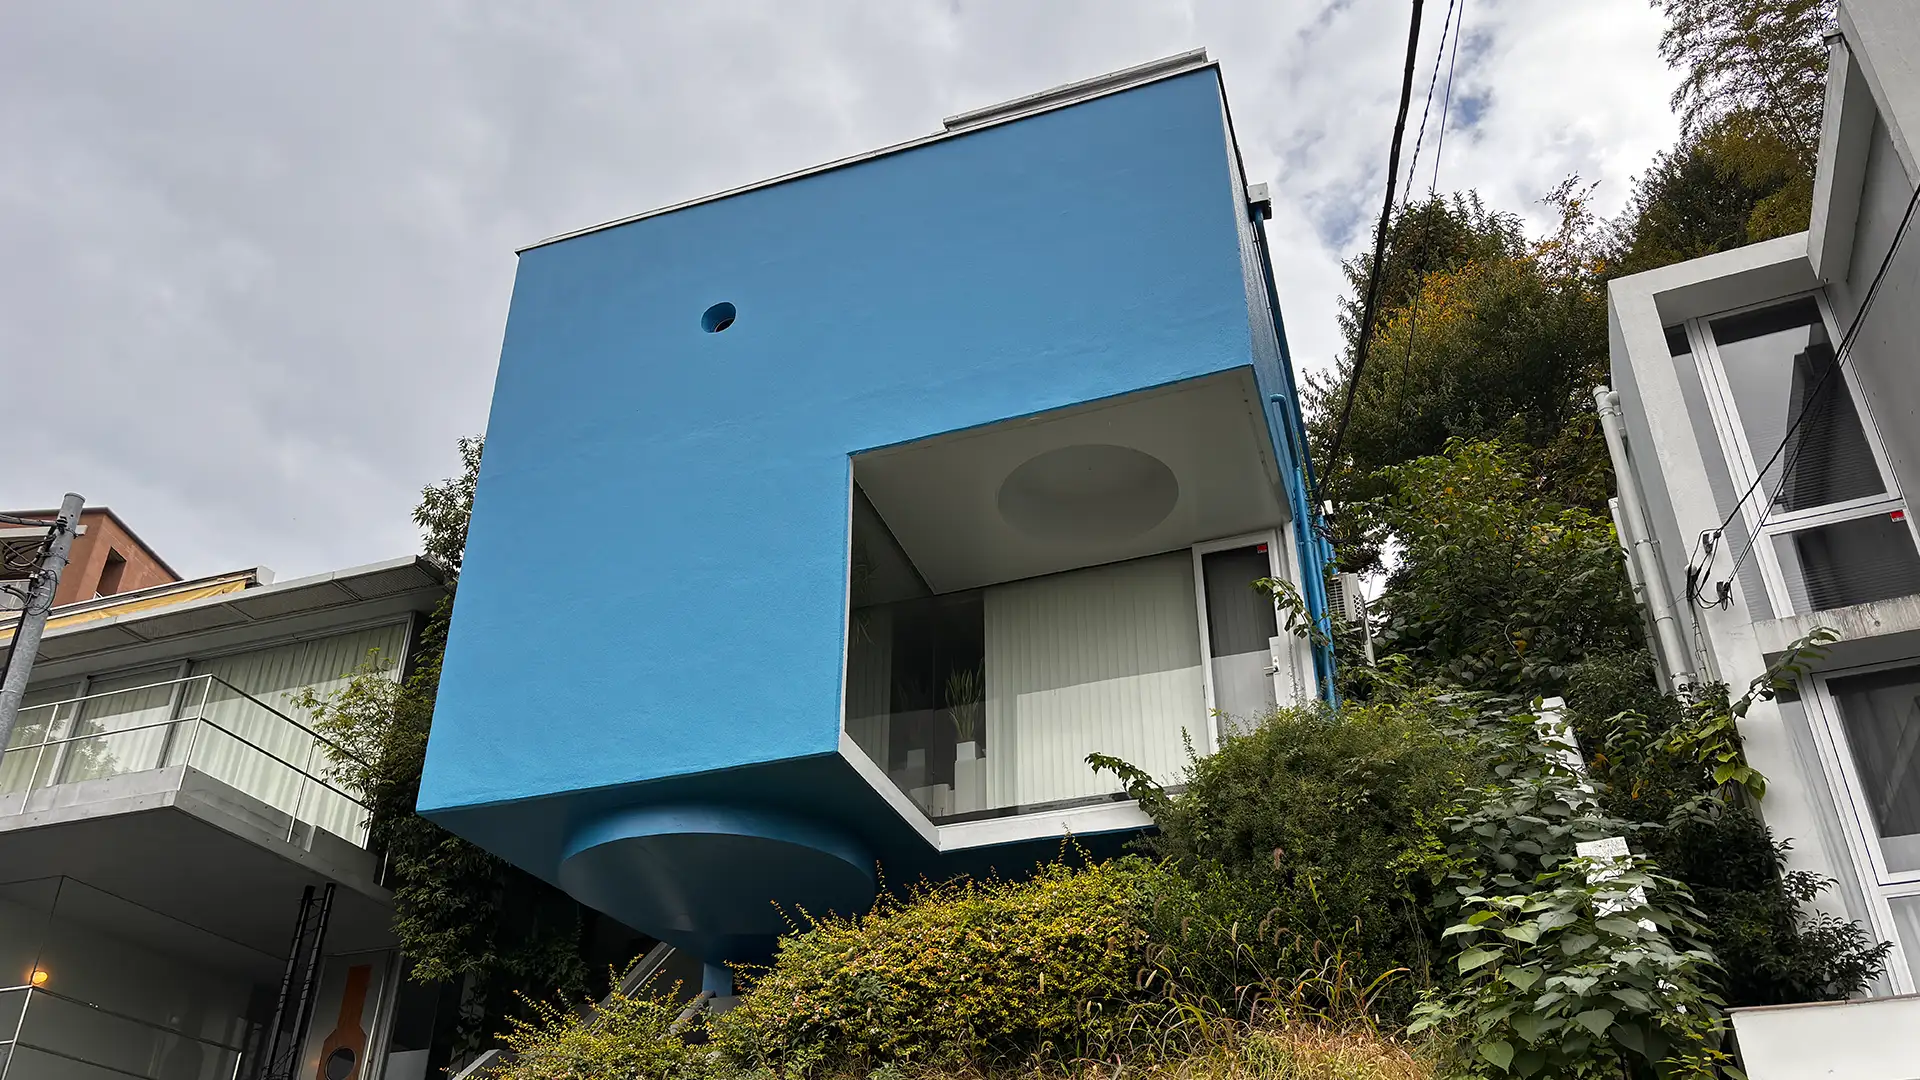 Blue Box House